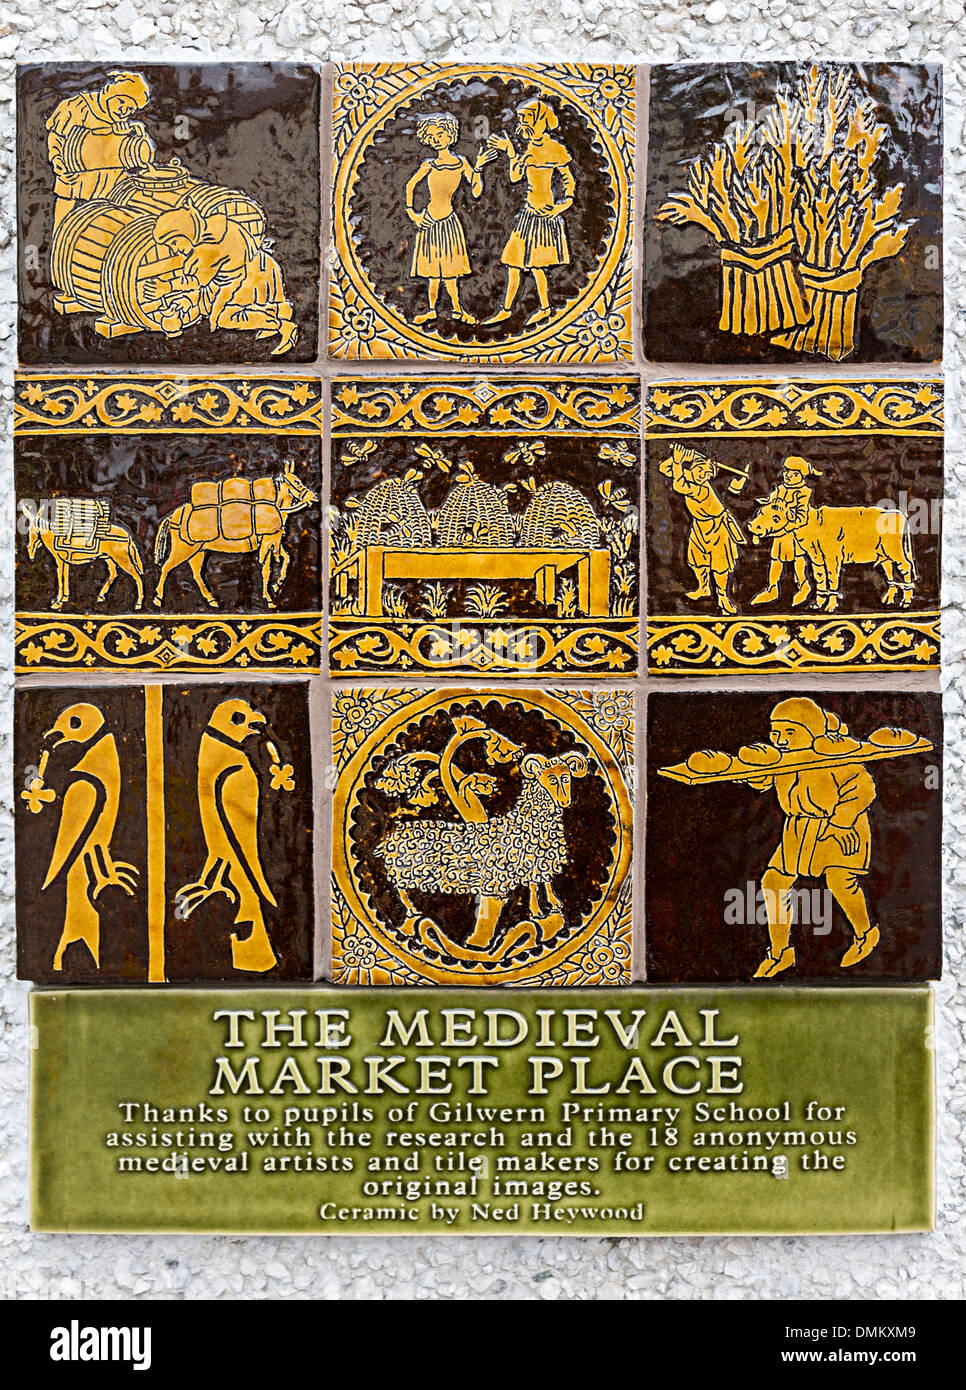 Mittelalterlichen Marktplatz Keramik Gedenktafel an Wand, Abergavenny, Wales, UK Stockfoto